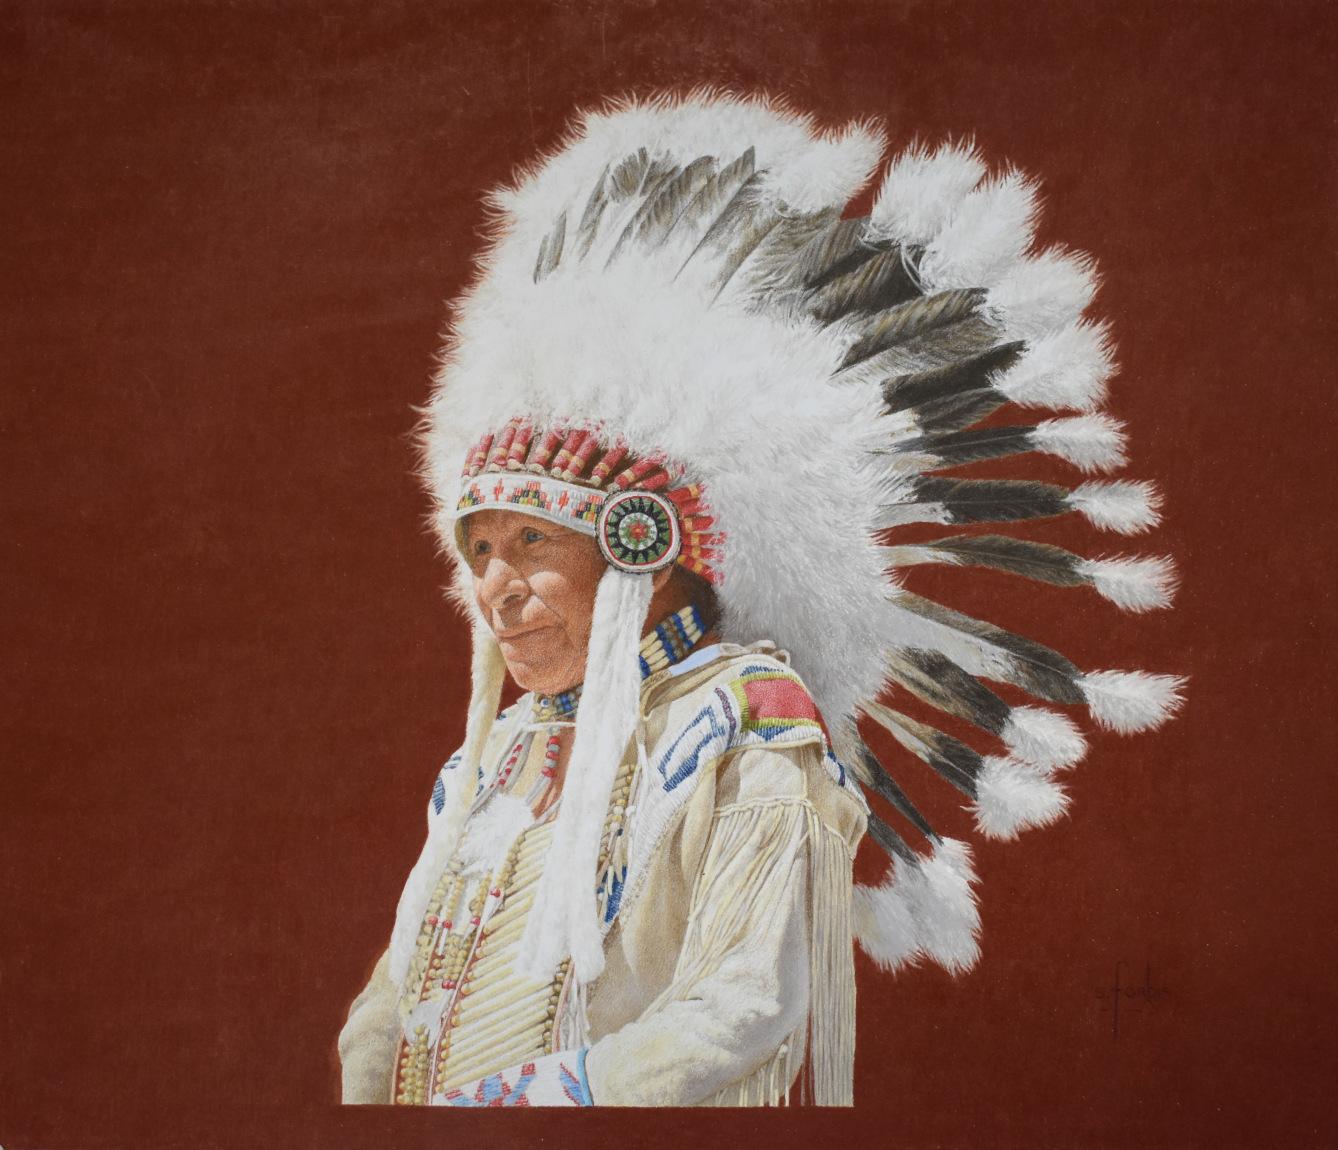 Steve Forbis Figurative Art - "TRIBAL ELDER" NATIVE AMERICAN INDIAN CHIEF